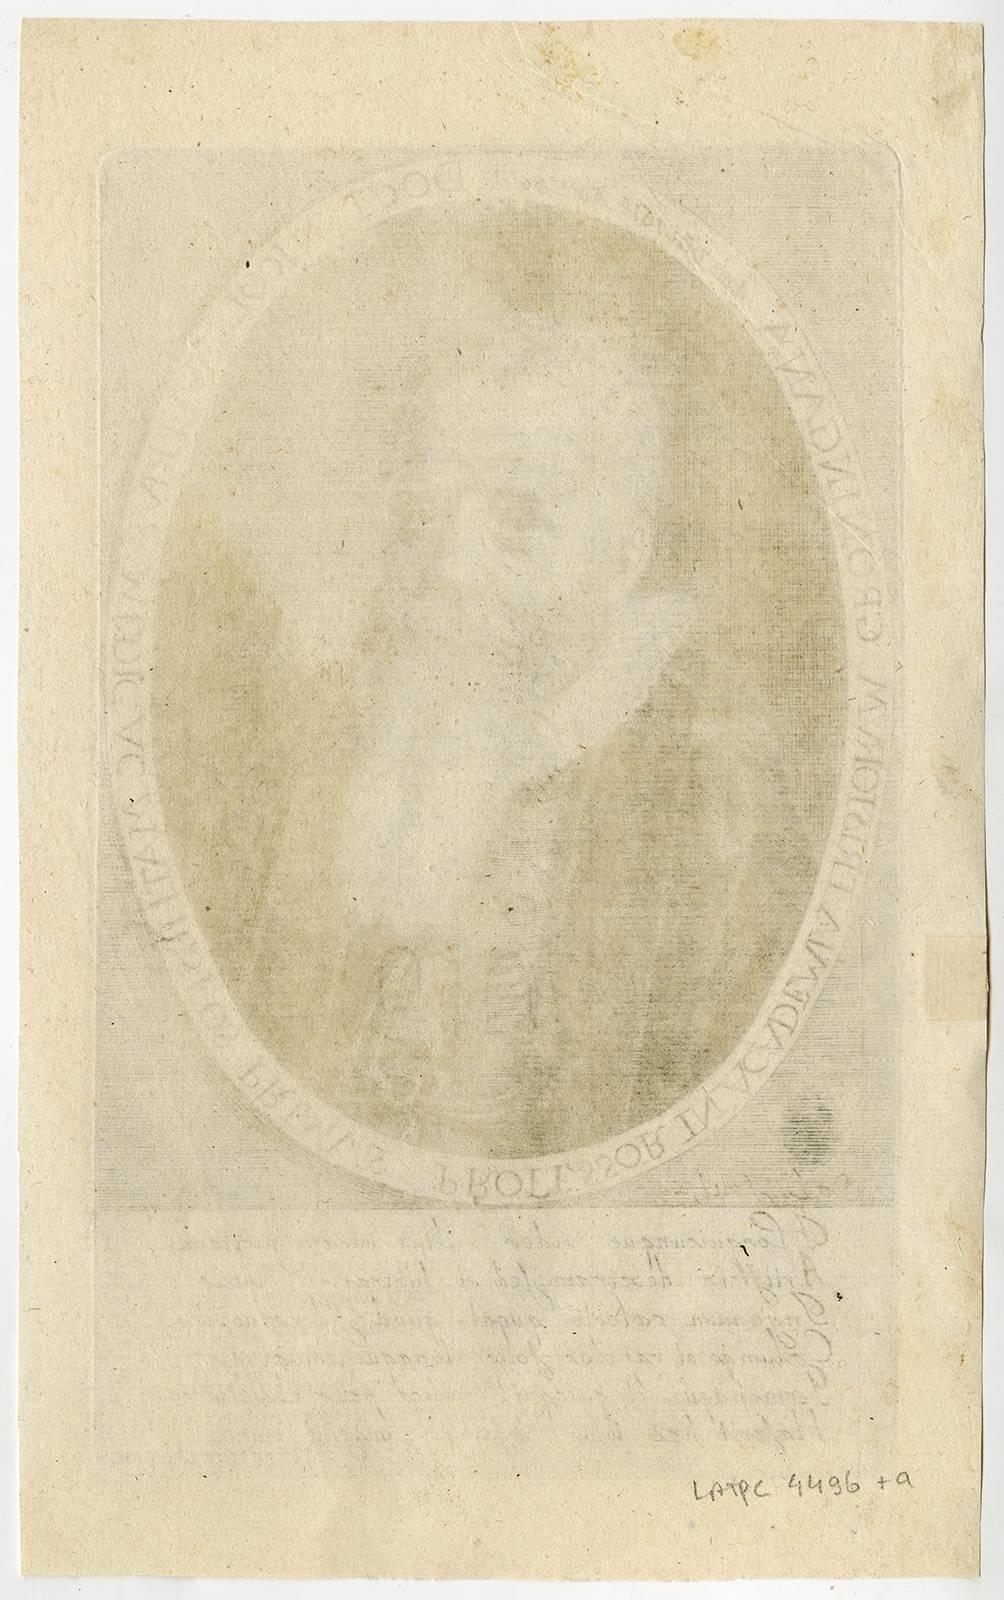 Doct. Nicol. Mulerus medica [..]. - Portrait of Nicolas Mulerus [...]. - Print by Simon Anton van Lamsweerde